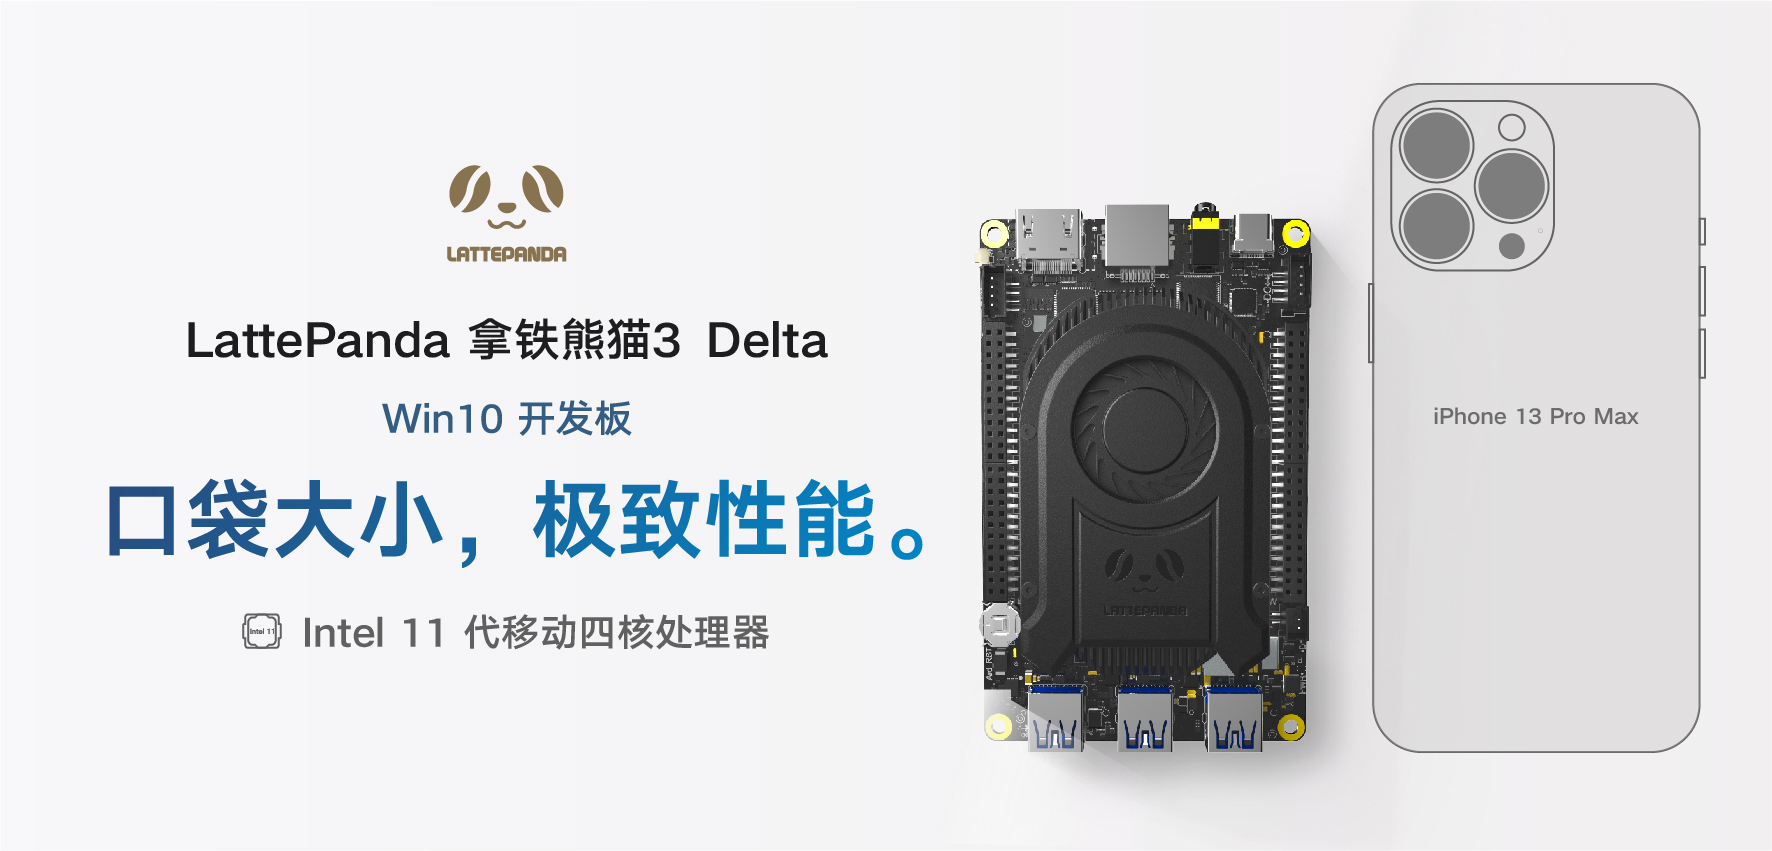 DFRobot最新创客活动-LattePanda 拿铁熊猫 3 Delta Win10 开发板